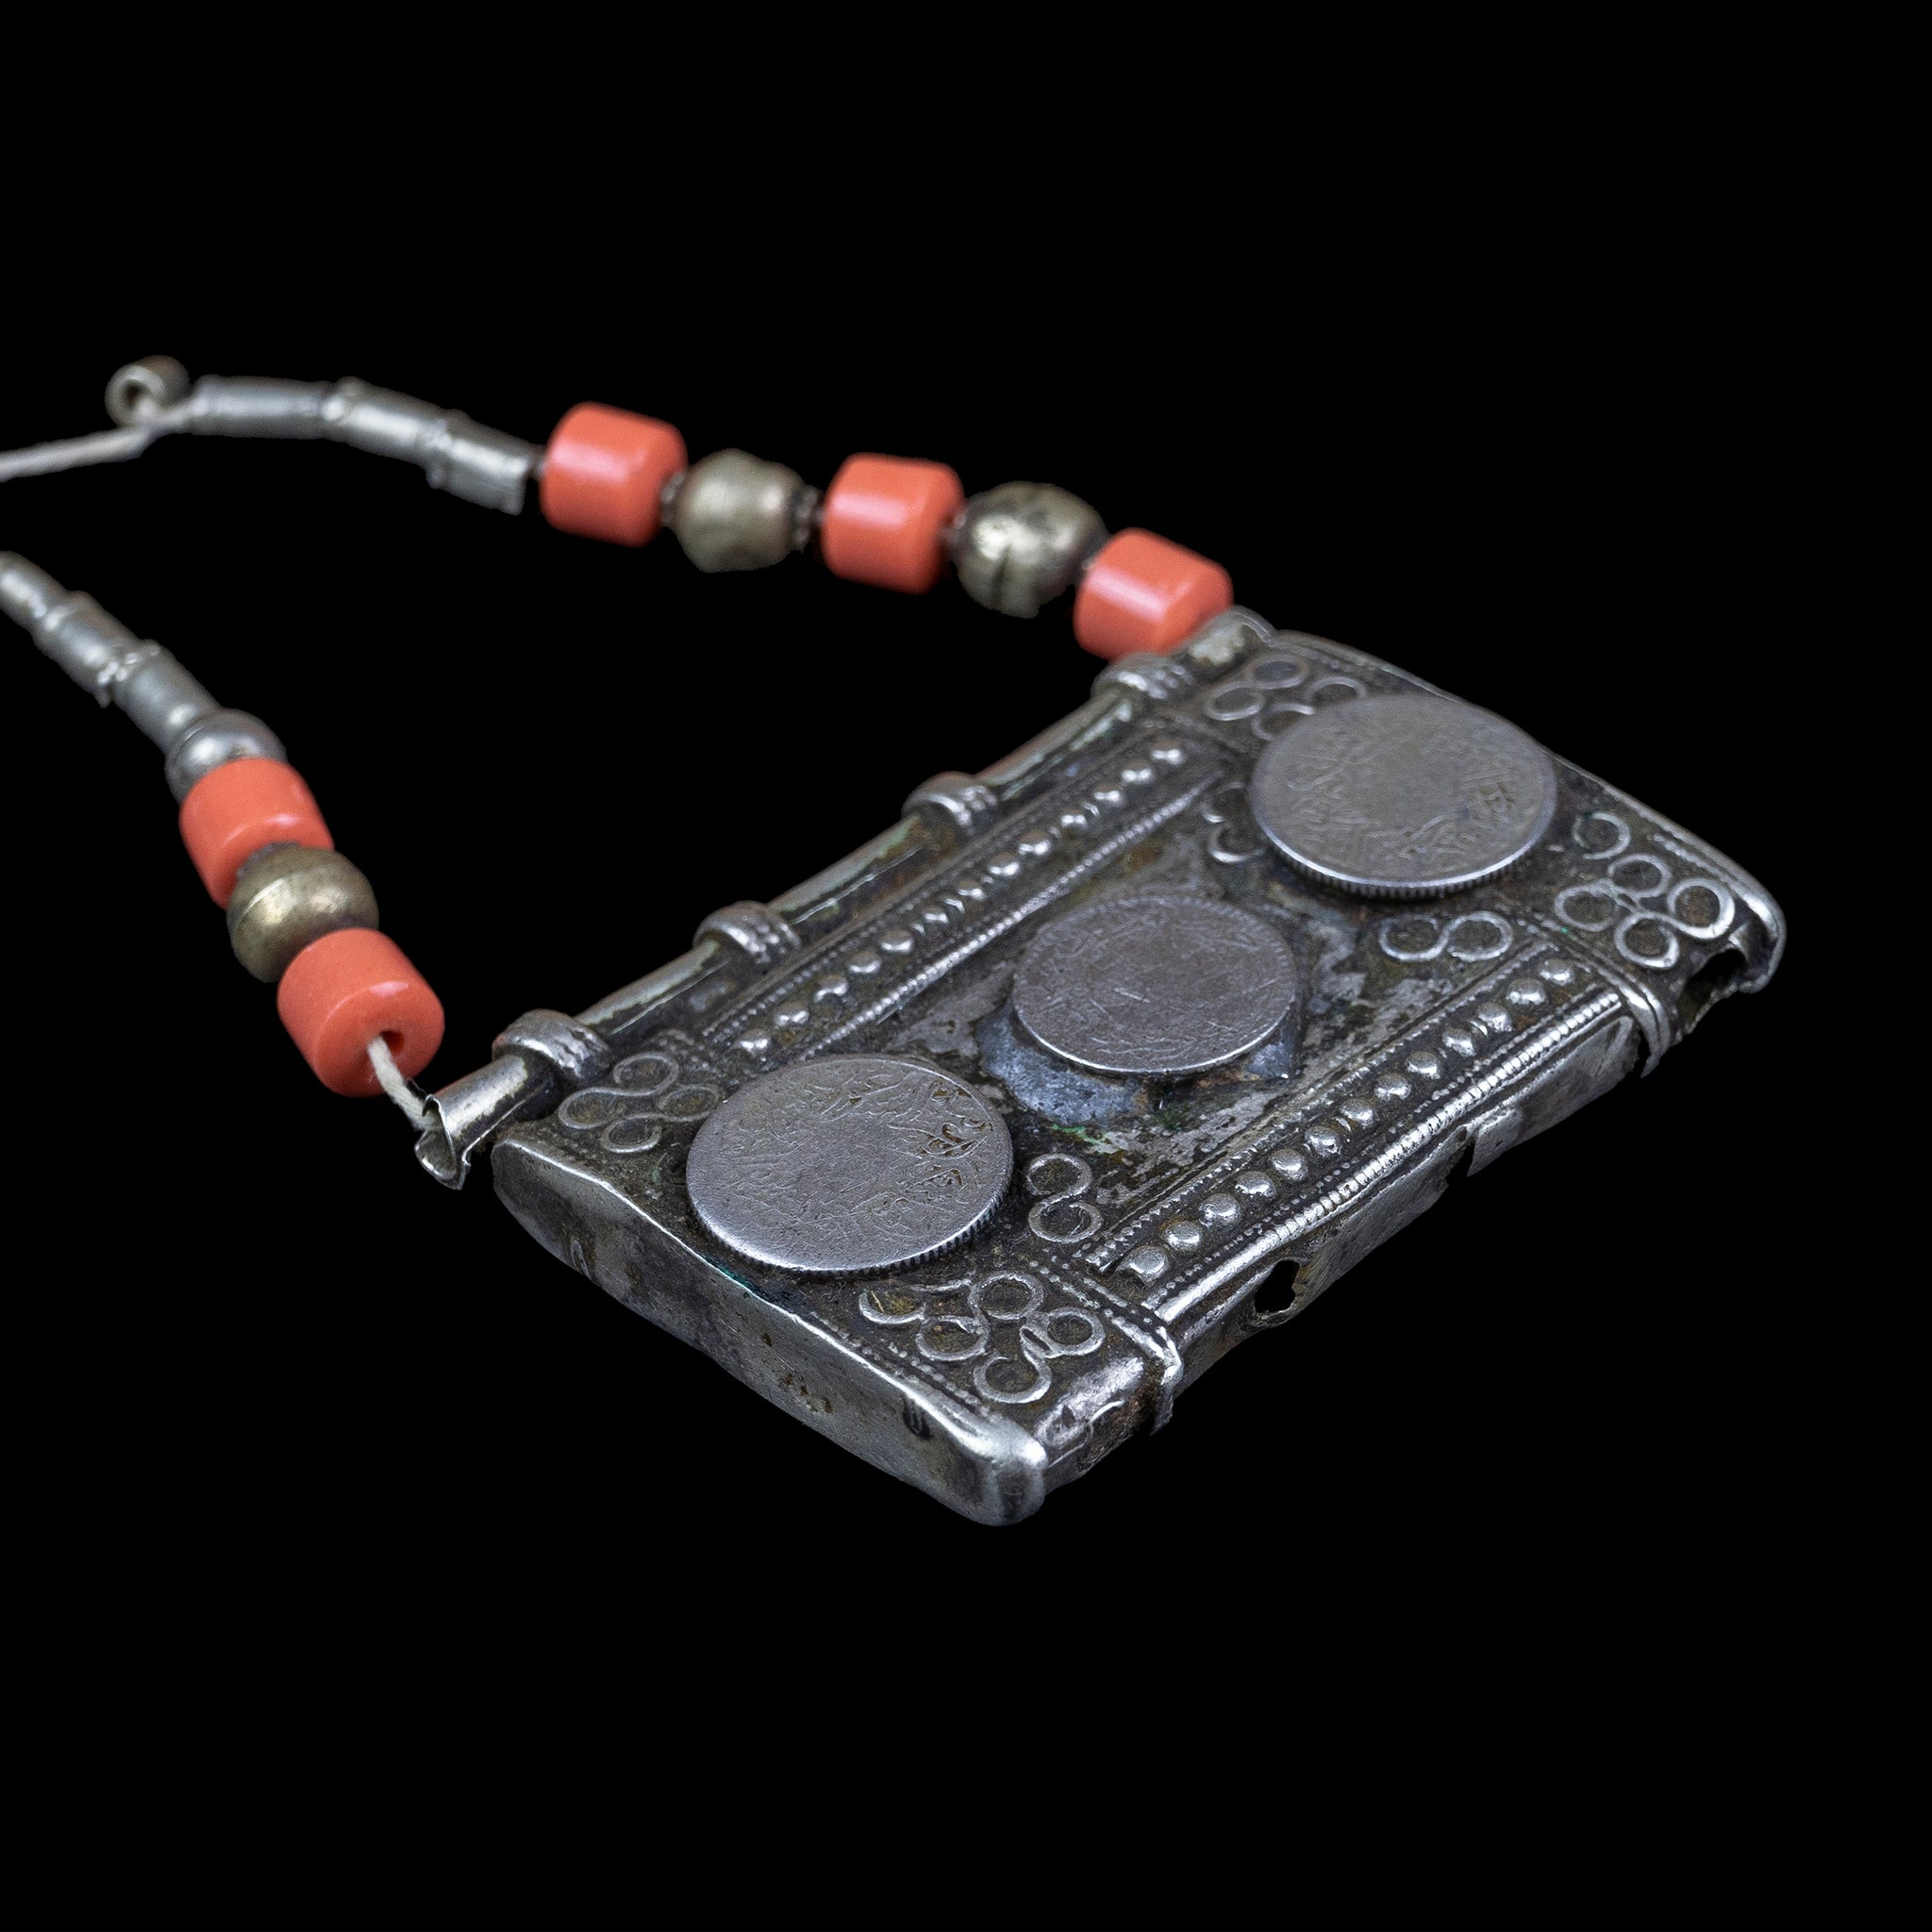 Antique Amulet Pendant from the Arabian Peninsula.